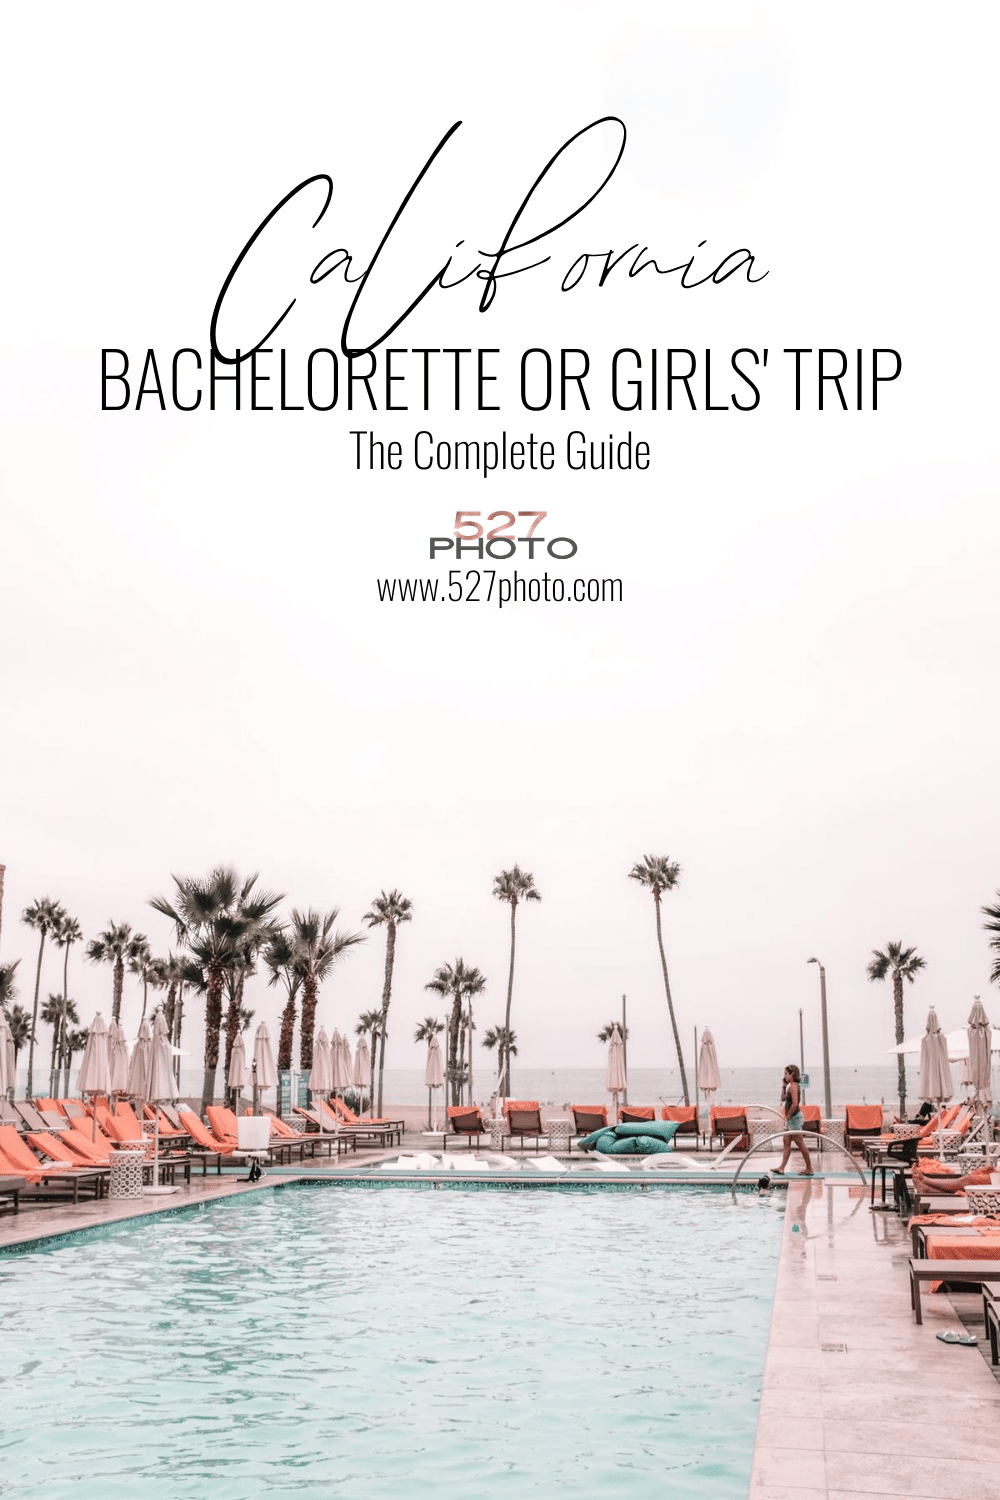 California bachelorette party and girls trip idea